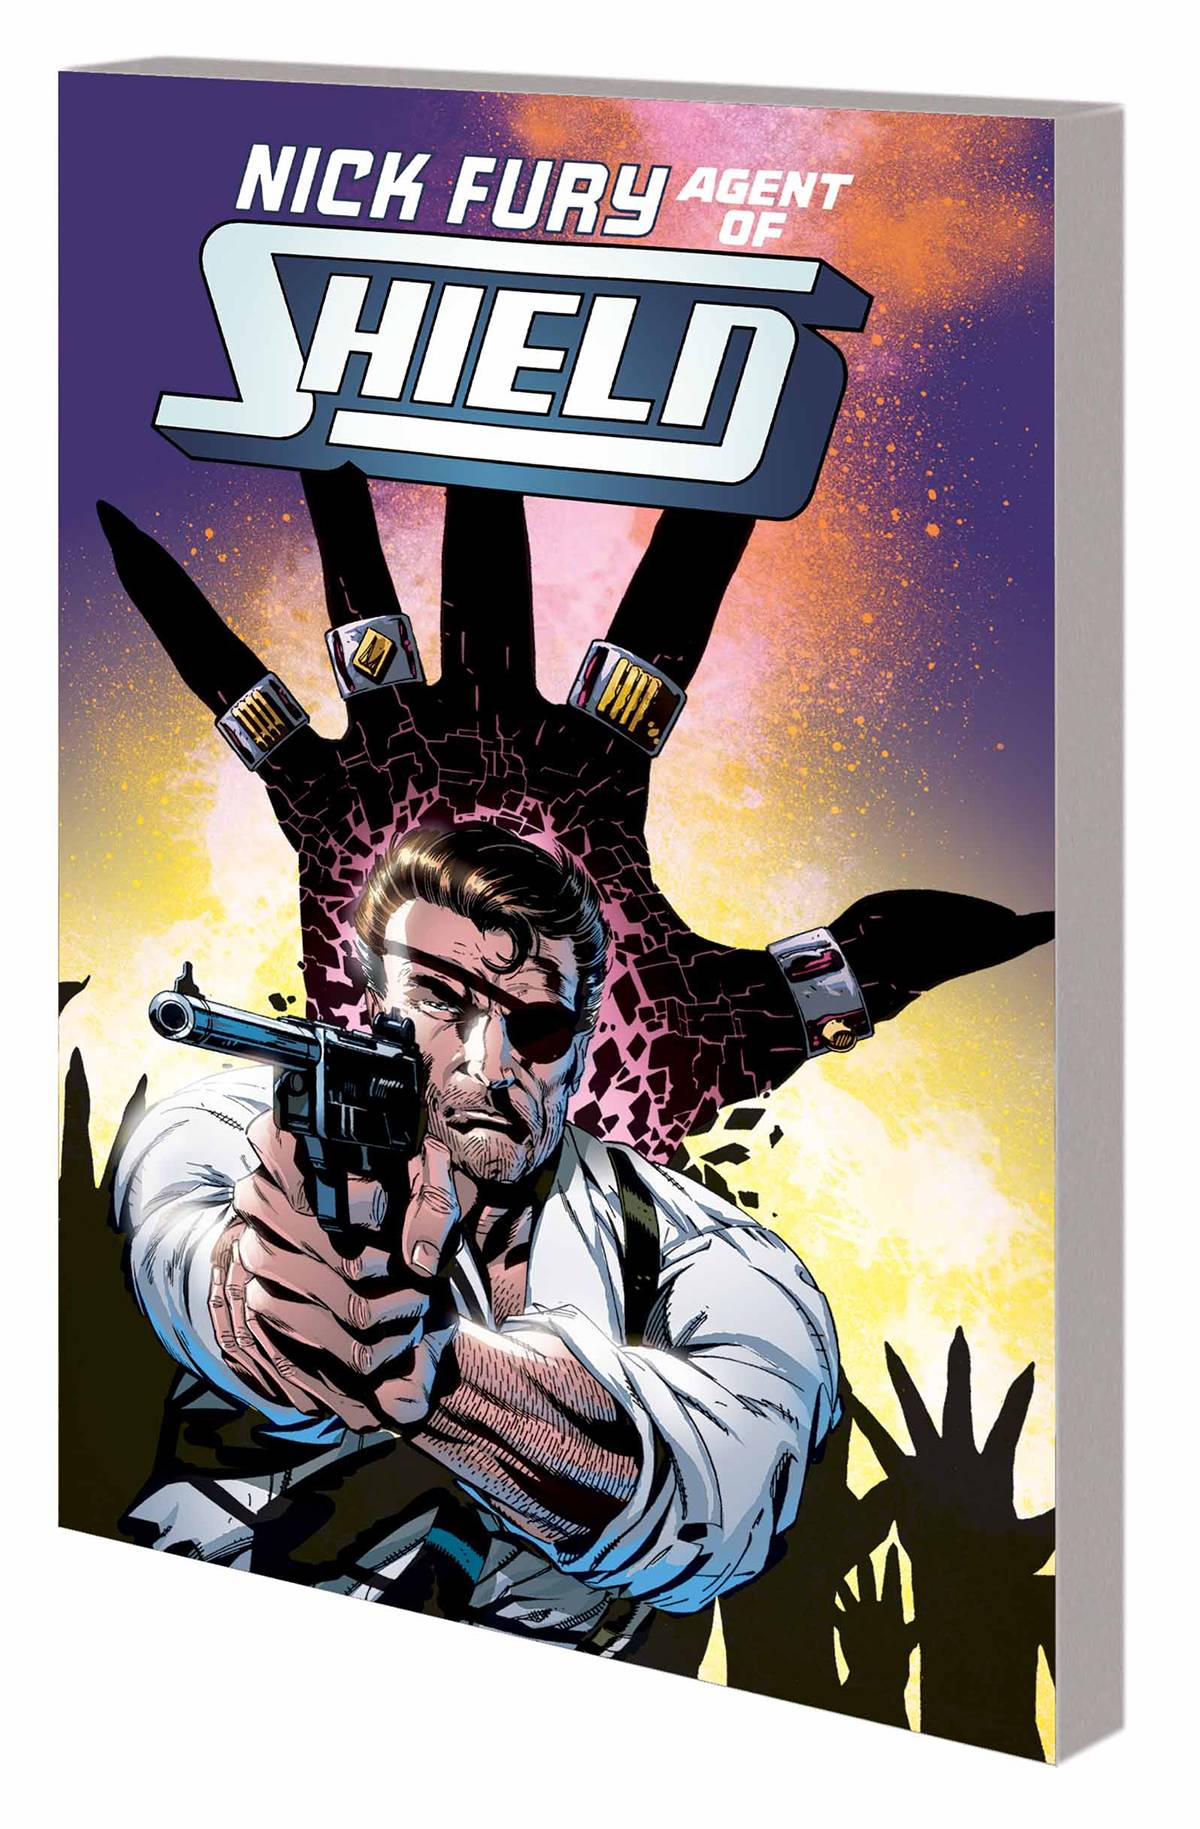 Nick Fury Classic Graphic Novel Volume 3 Agent of Shield